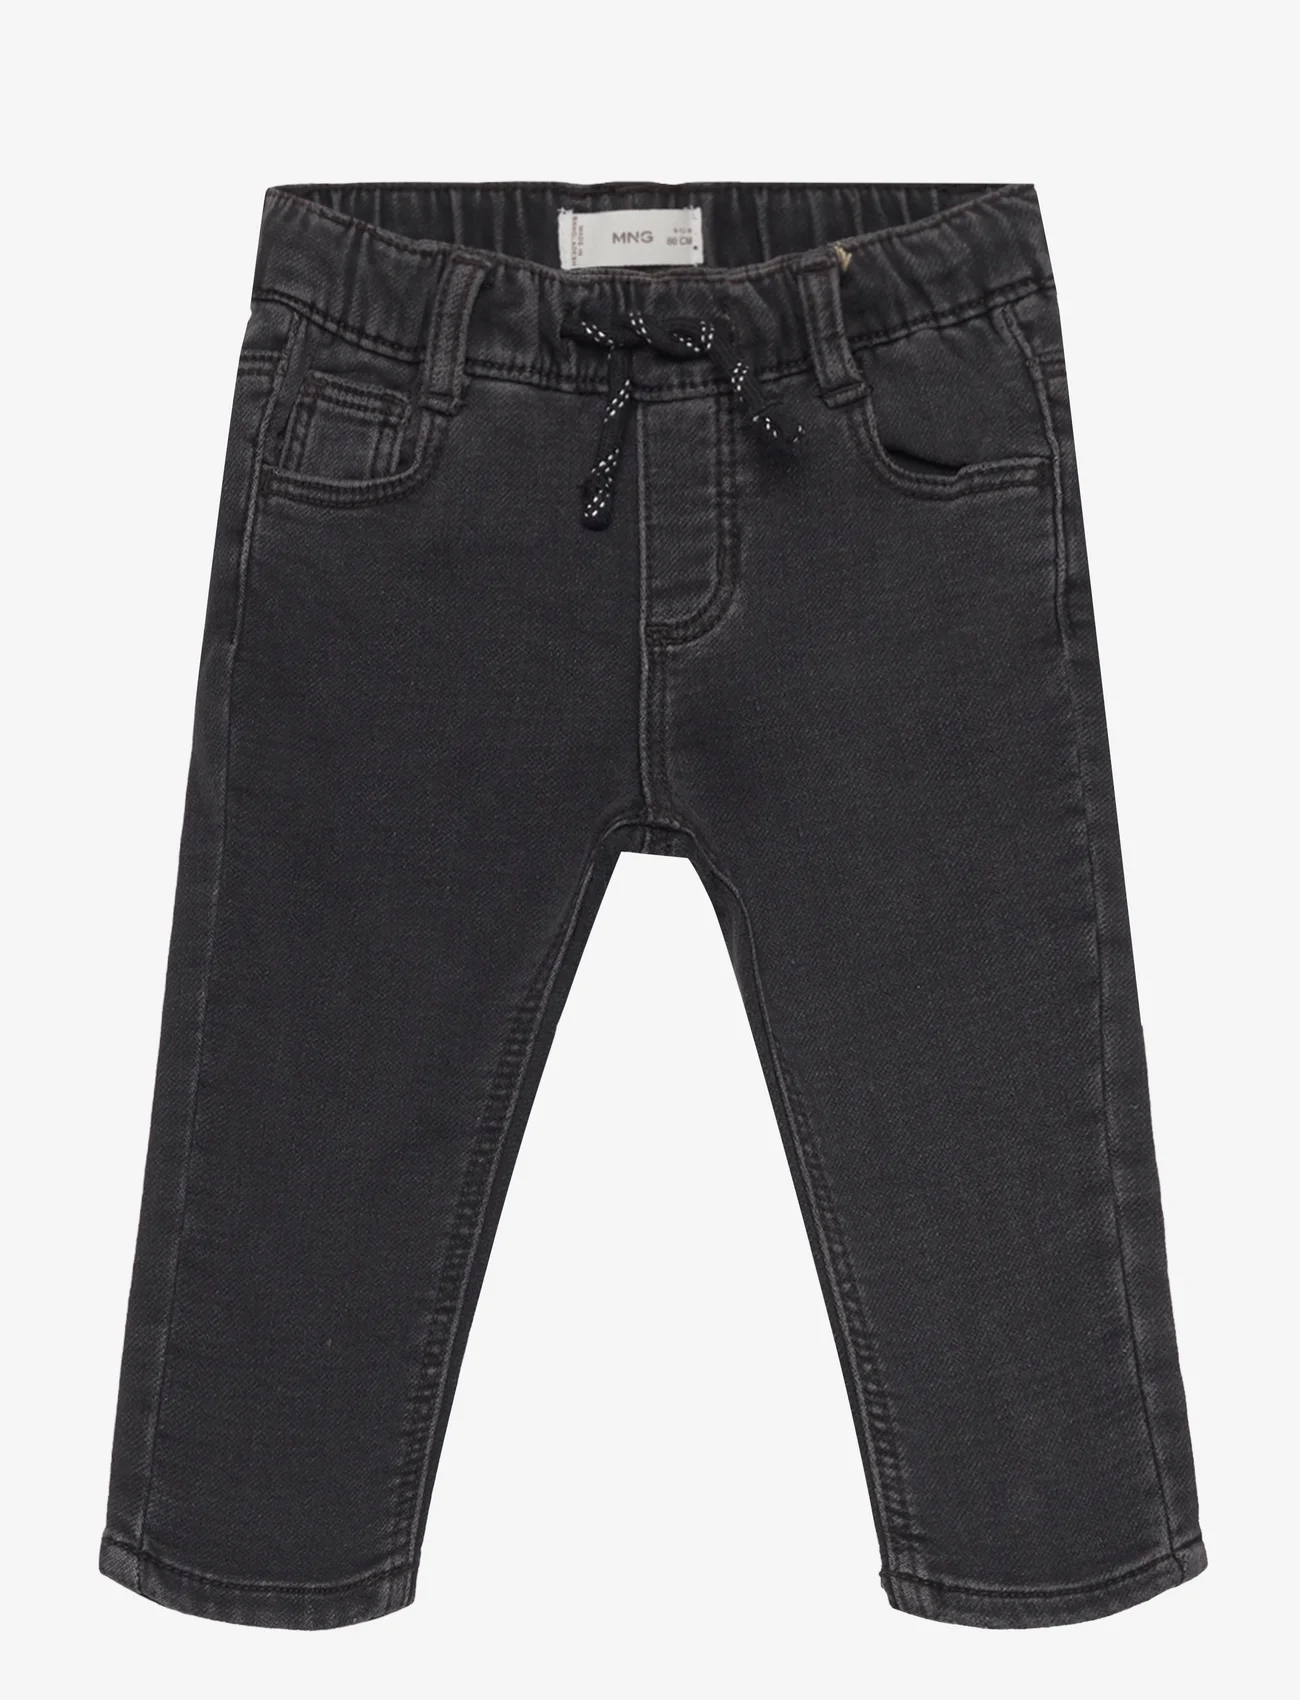 Mango - Drawstring waist jeans - pillifarkut - open grey - 0